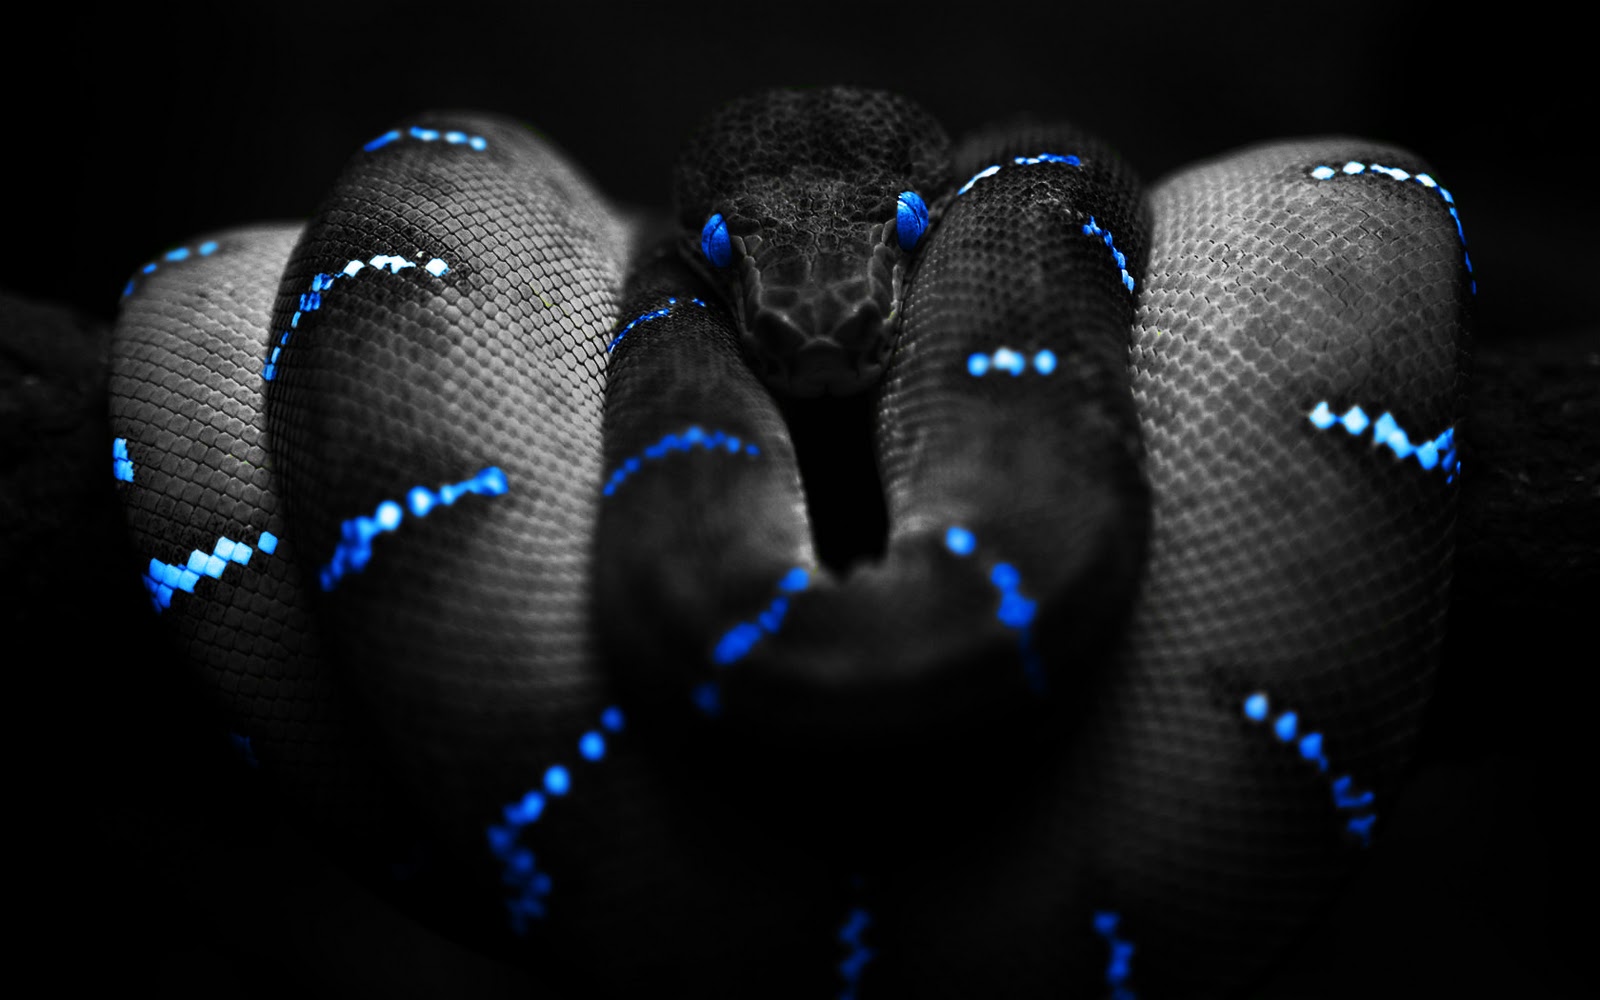 http://2.bp.blogspot.com/_2UbsSBz9ckE/S8ud1NQXETI/AAAAAAAABOE/I1rO8nzN-ow/s1600/Photoshop_Snake_HD_wallpaper_blue.jpg